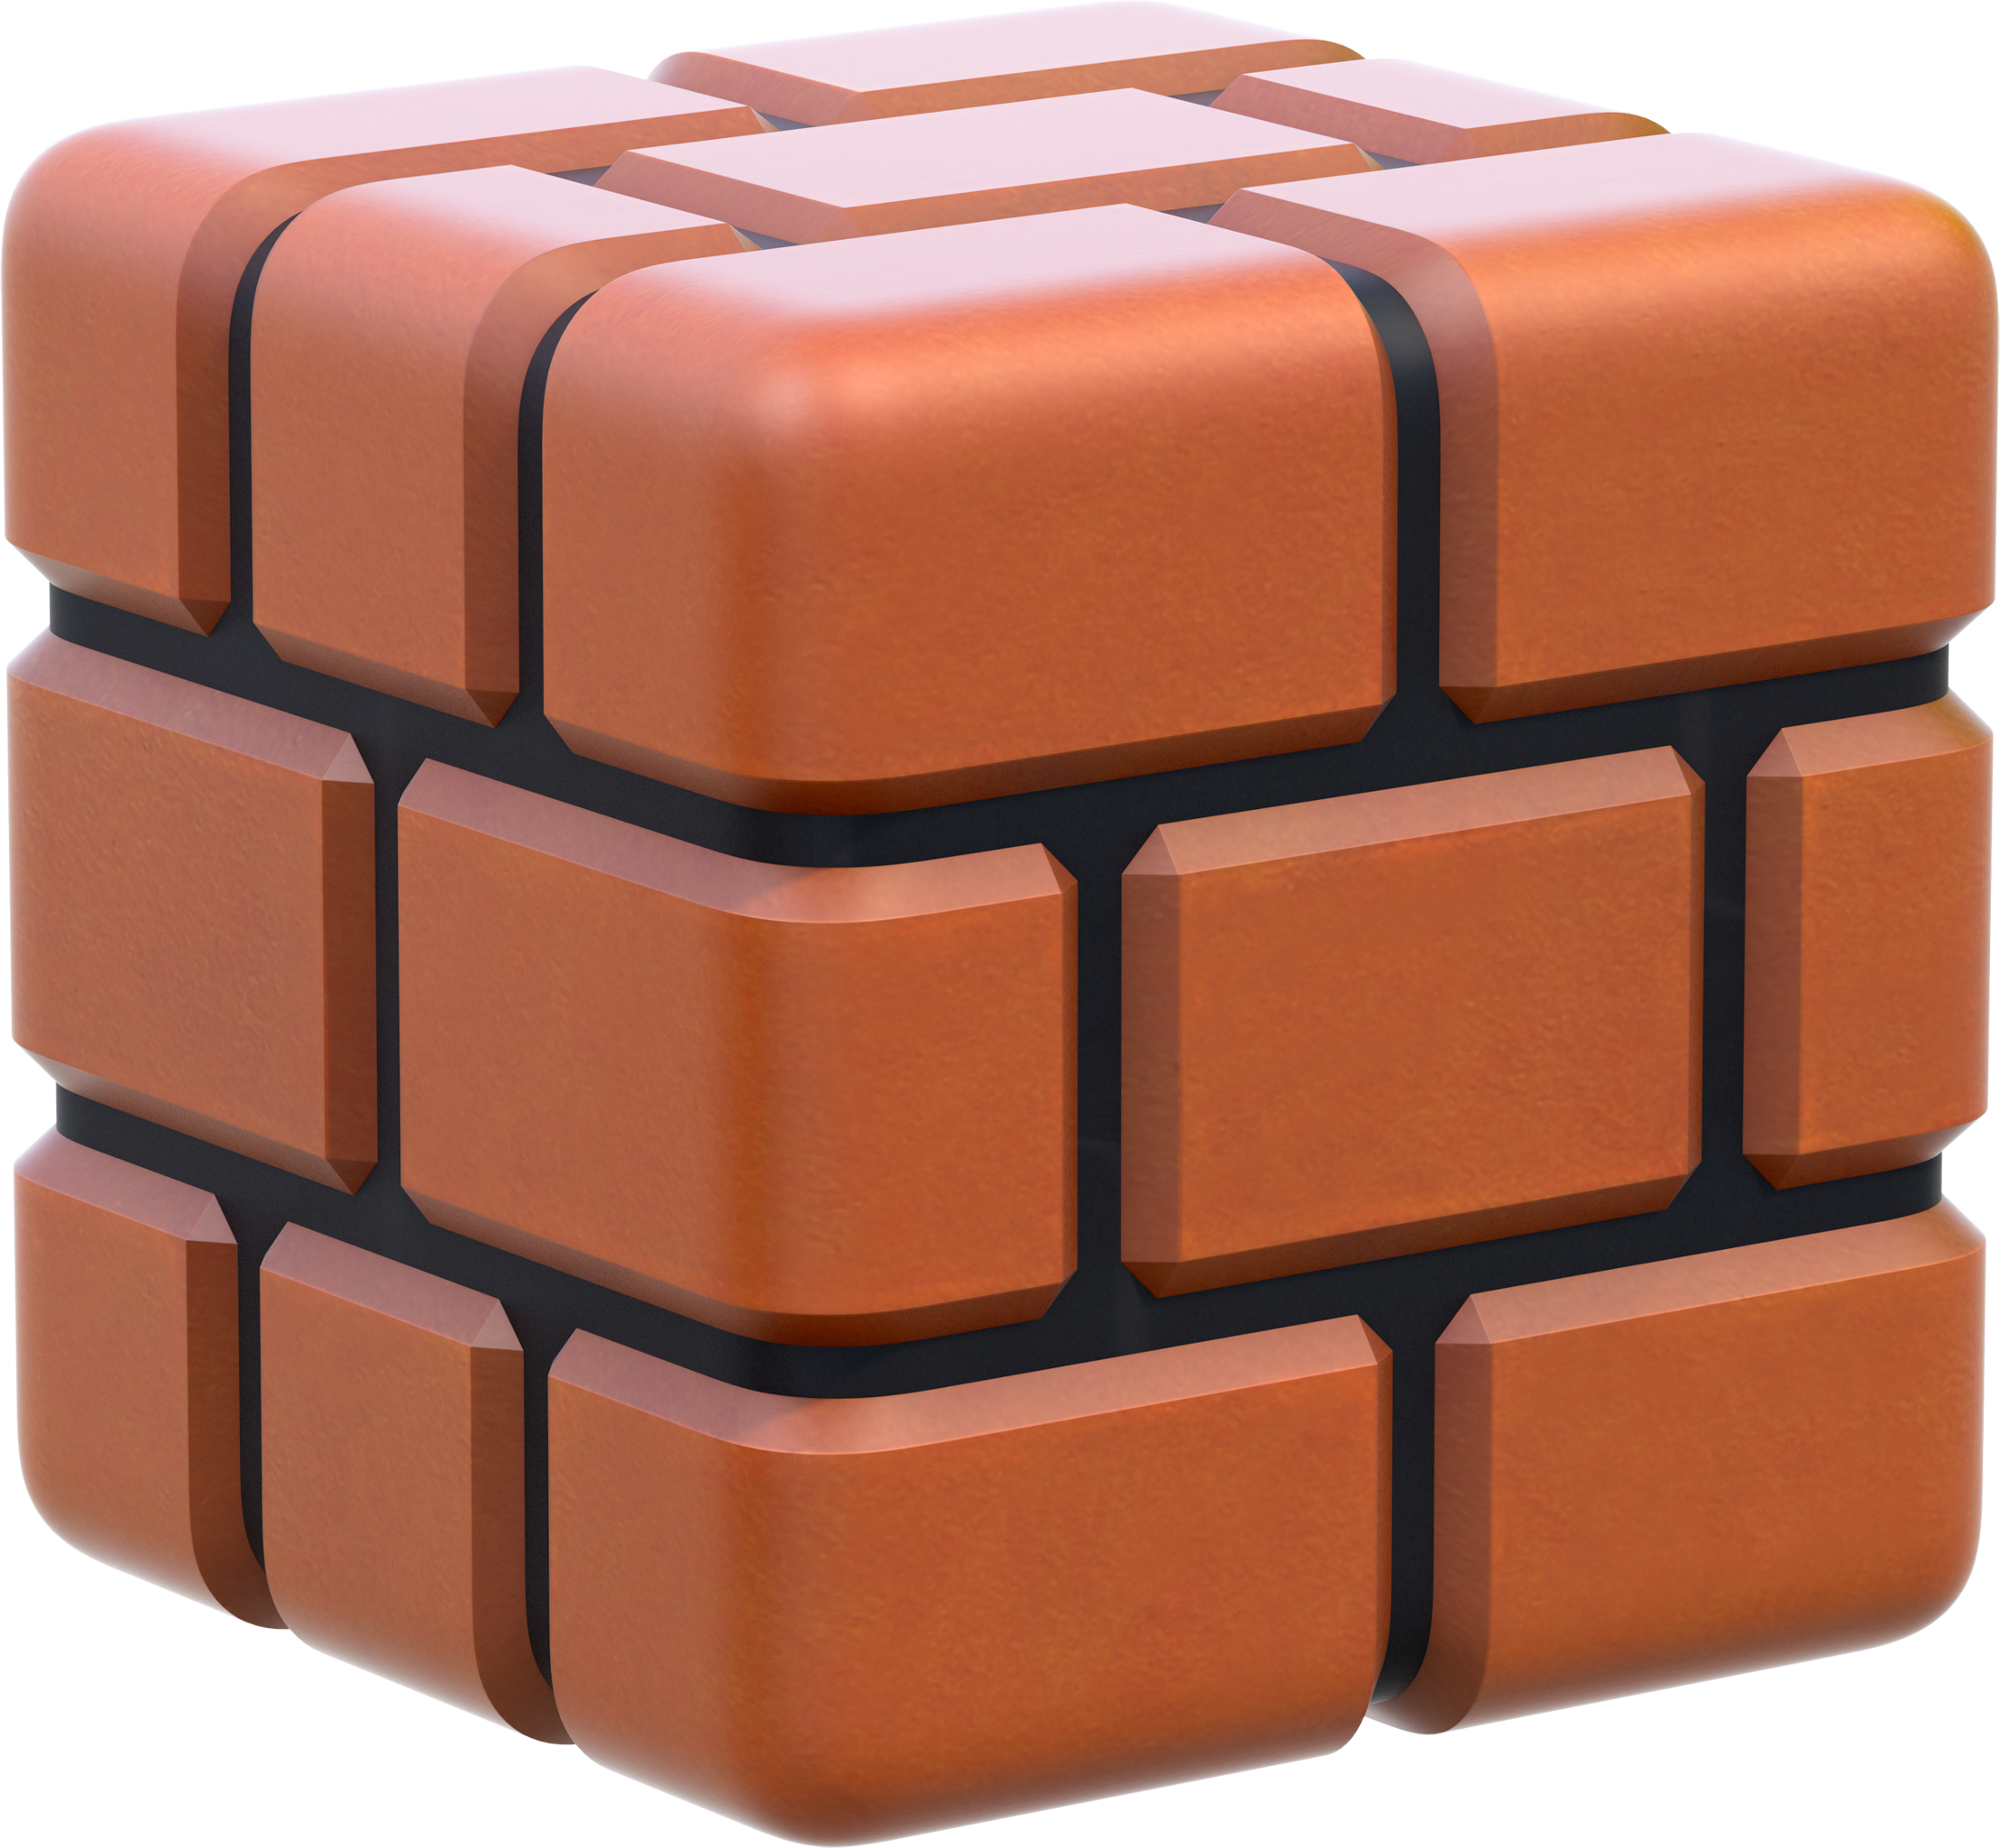 Artwork of a Brick Block in Super Mario 3D World